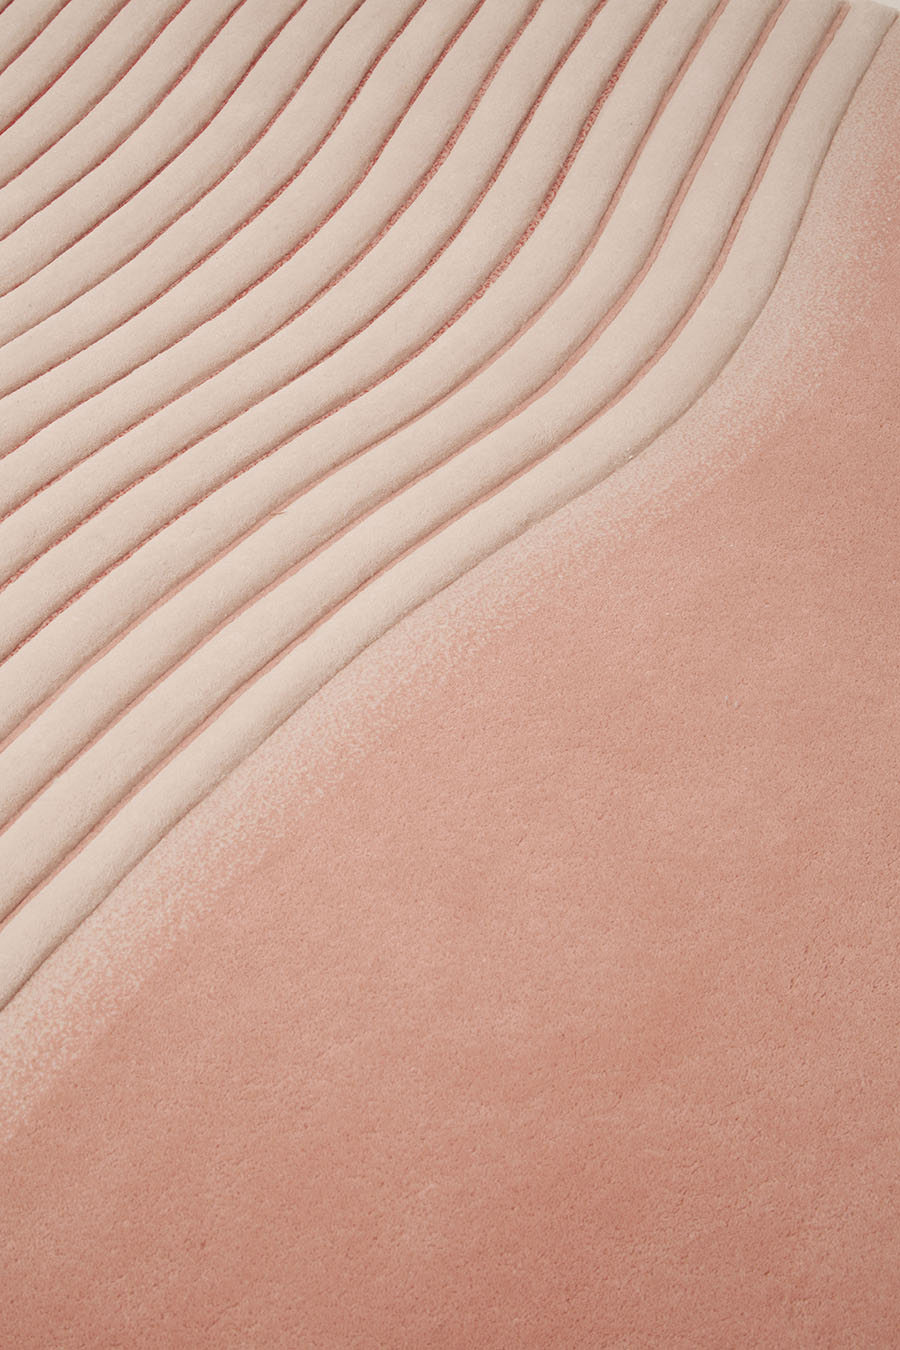 Pink gradient carved textured rug by Australian Designers Bernabeifreeman